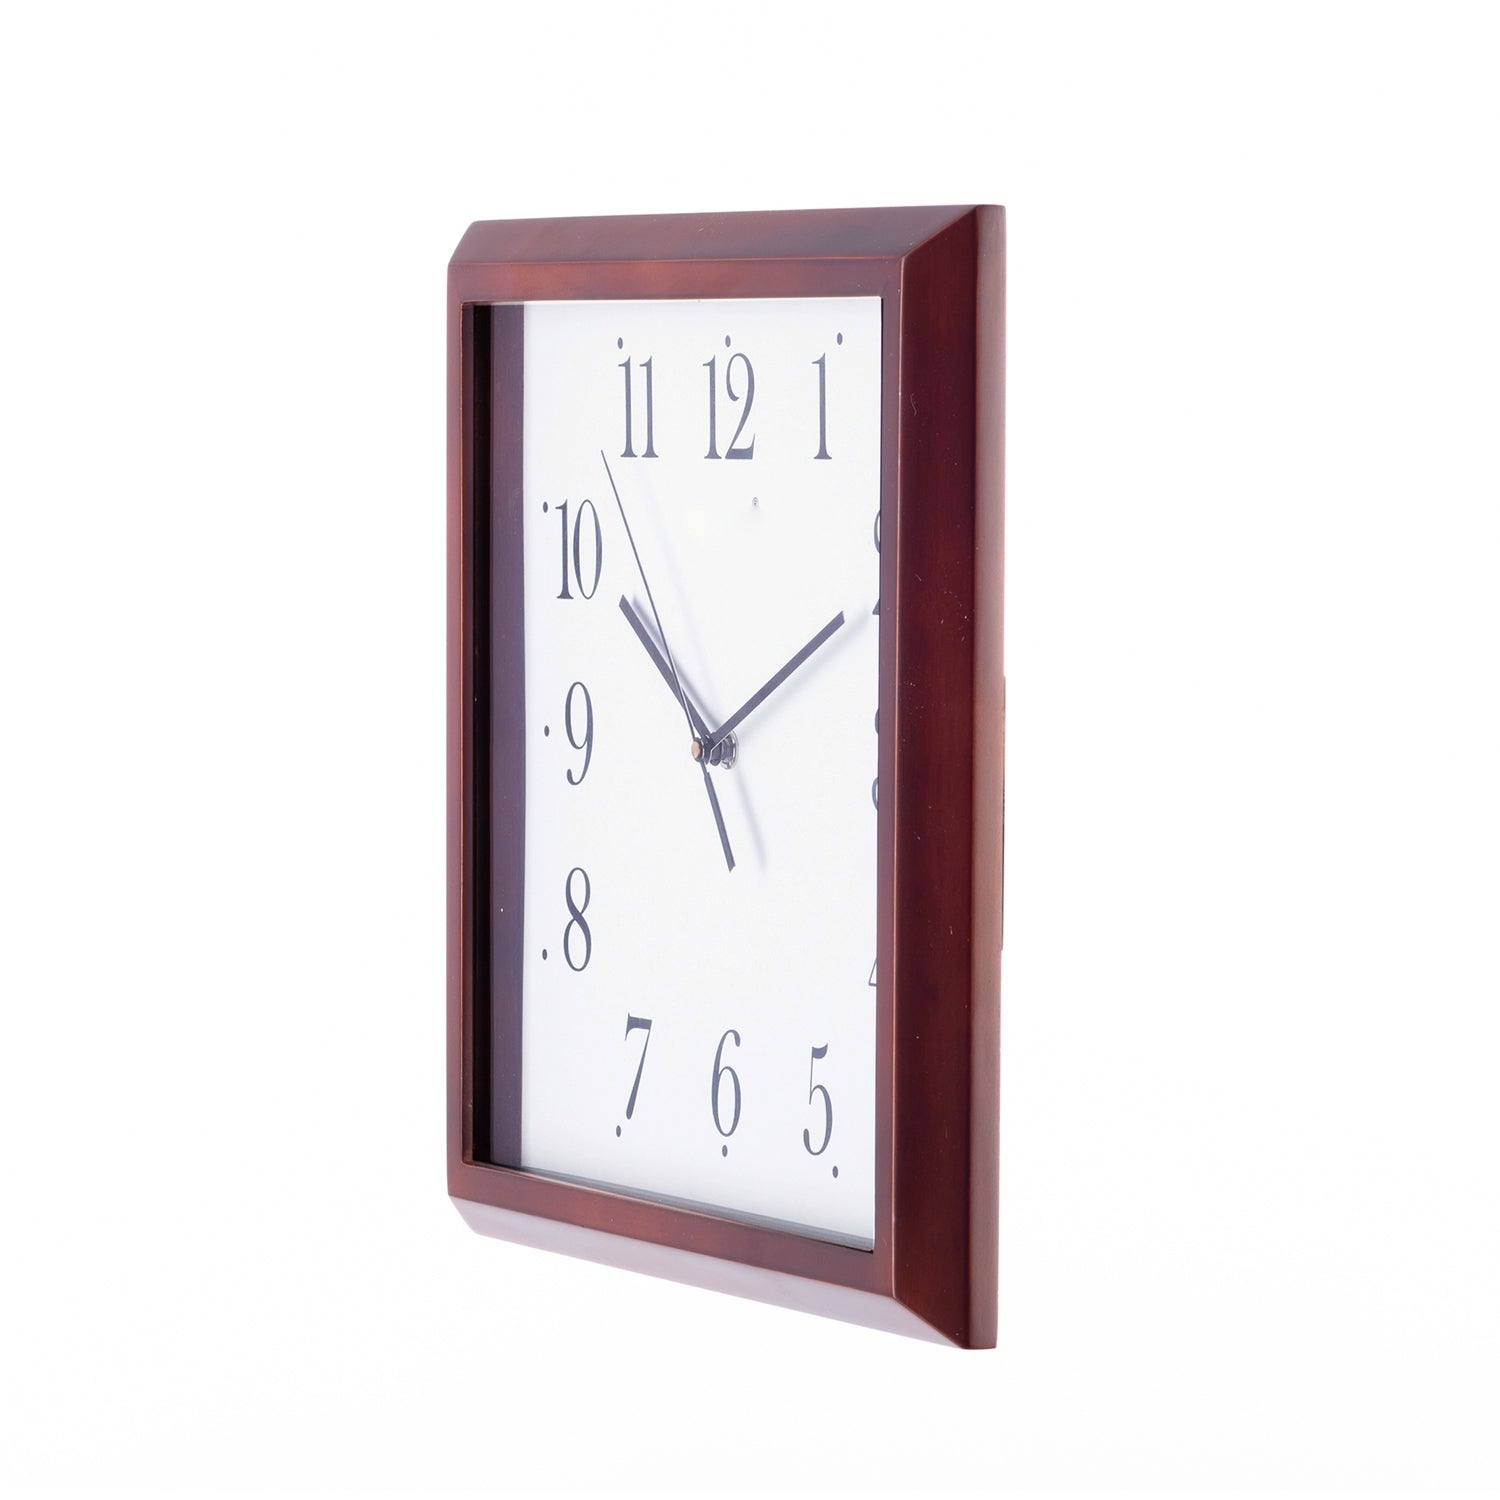 Premium Decorative Analog Square Shape Wooden Wall Clock 2